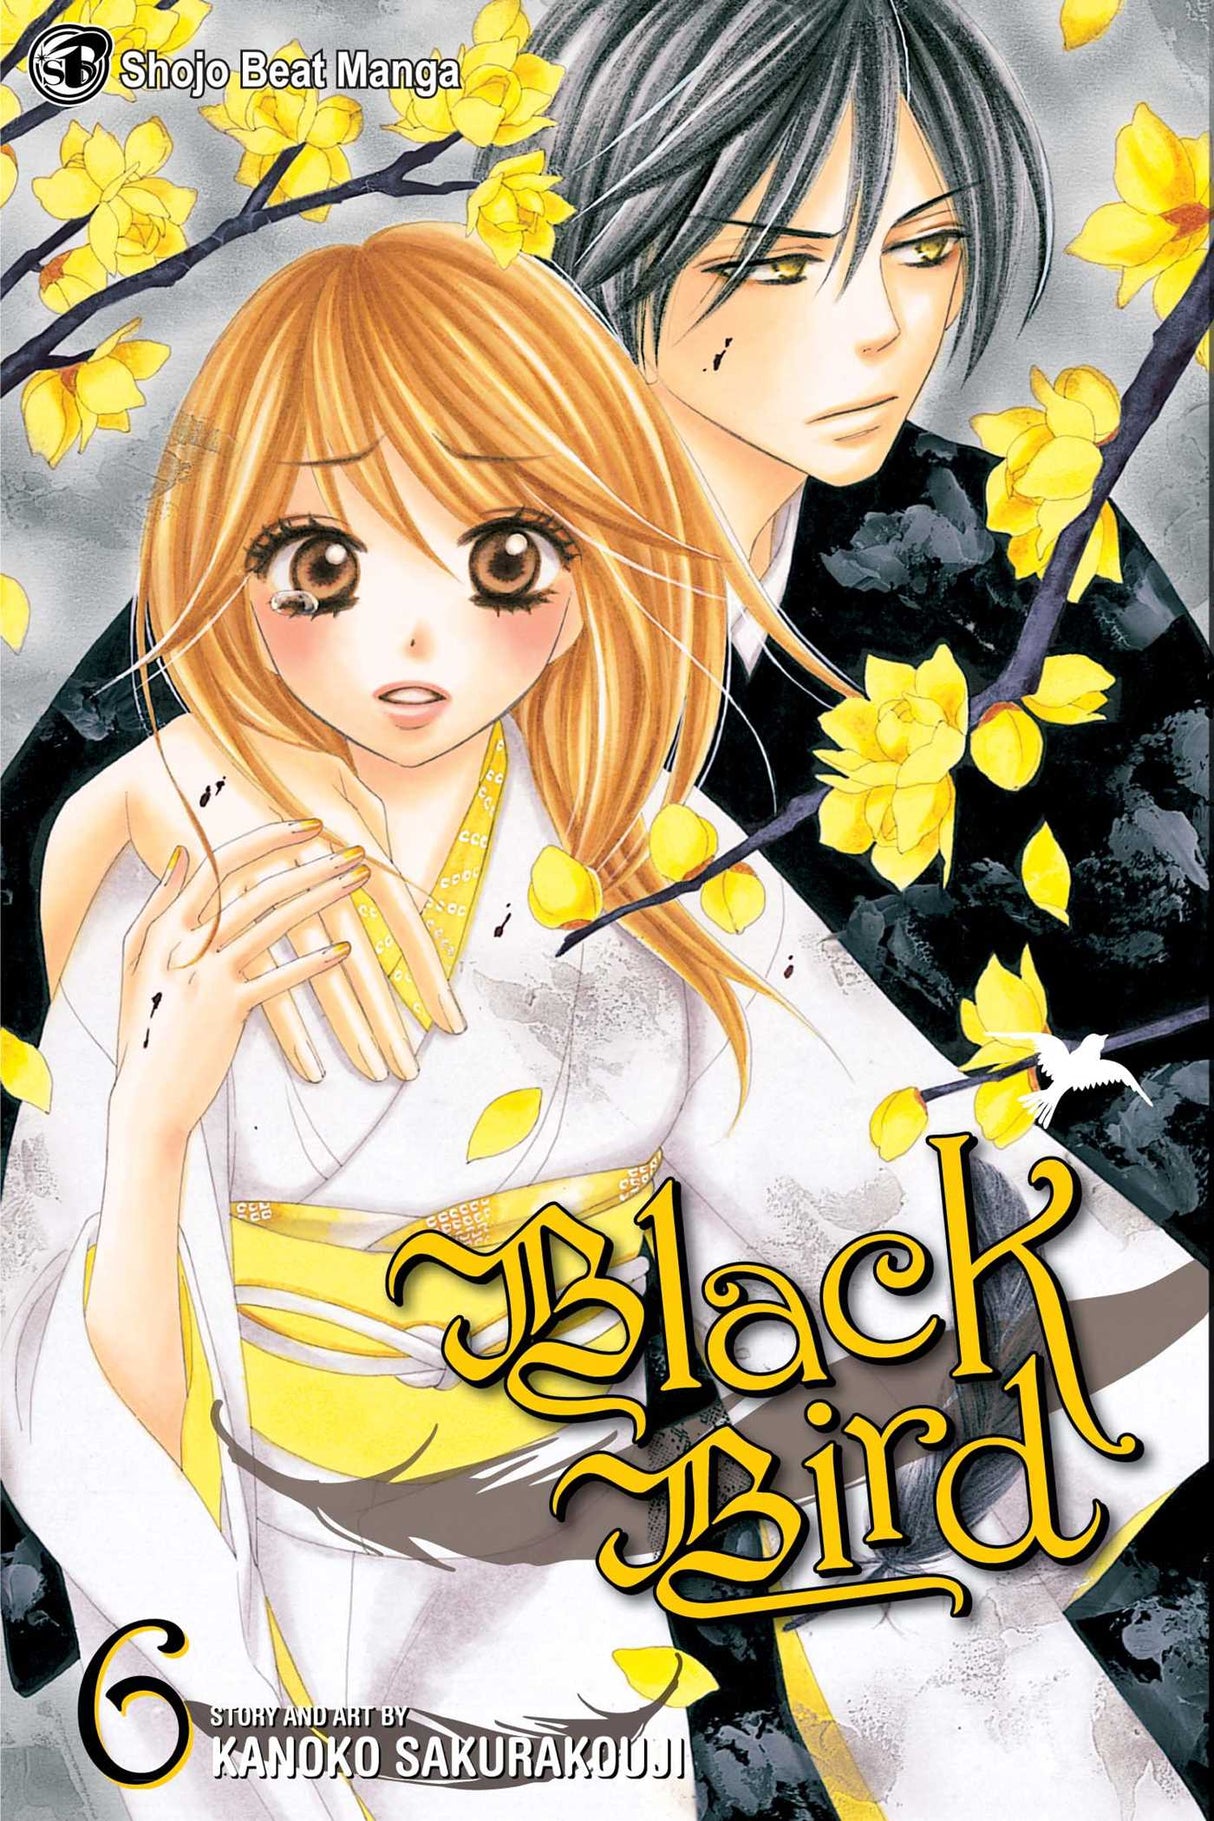 Cover image of the Manga Black-Bird-Vol-6